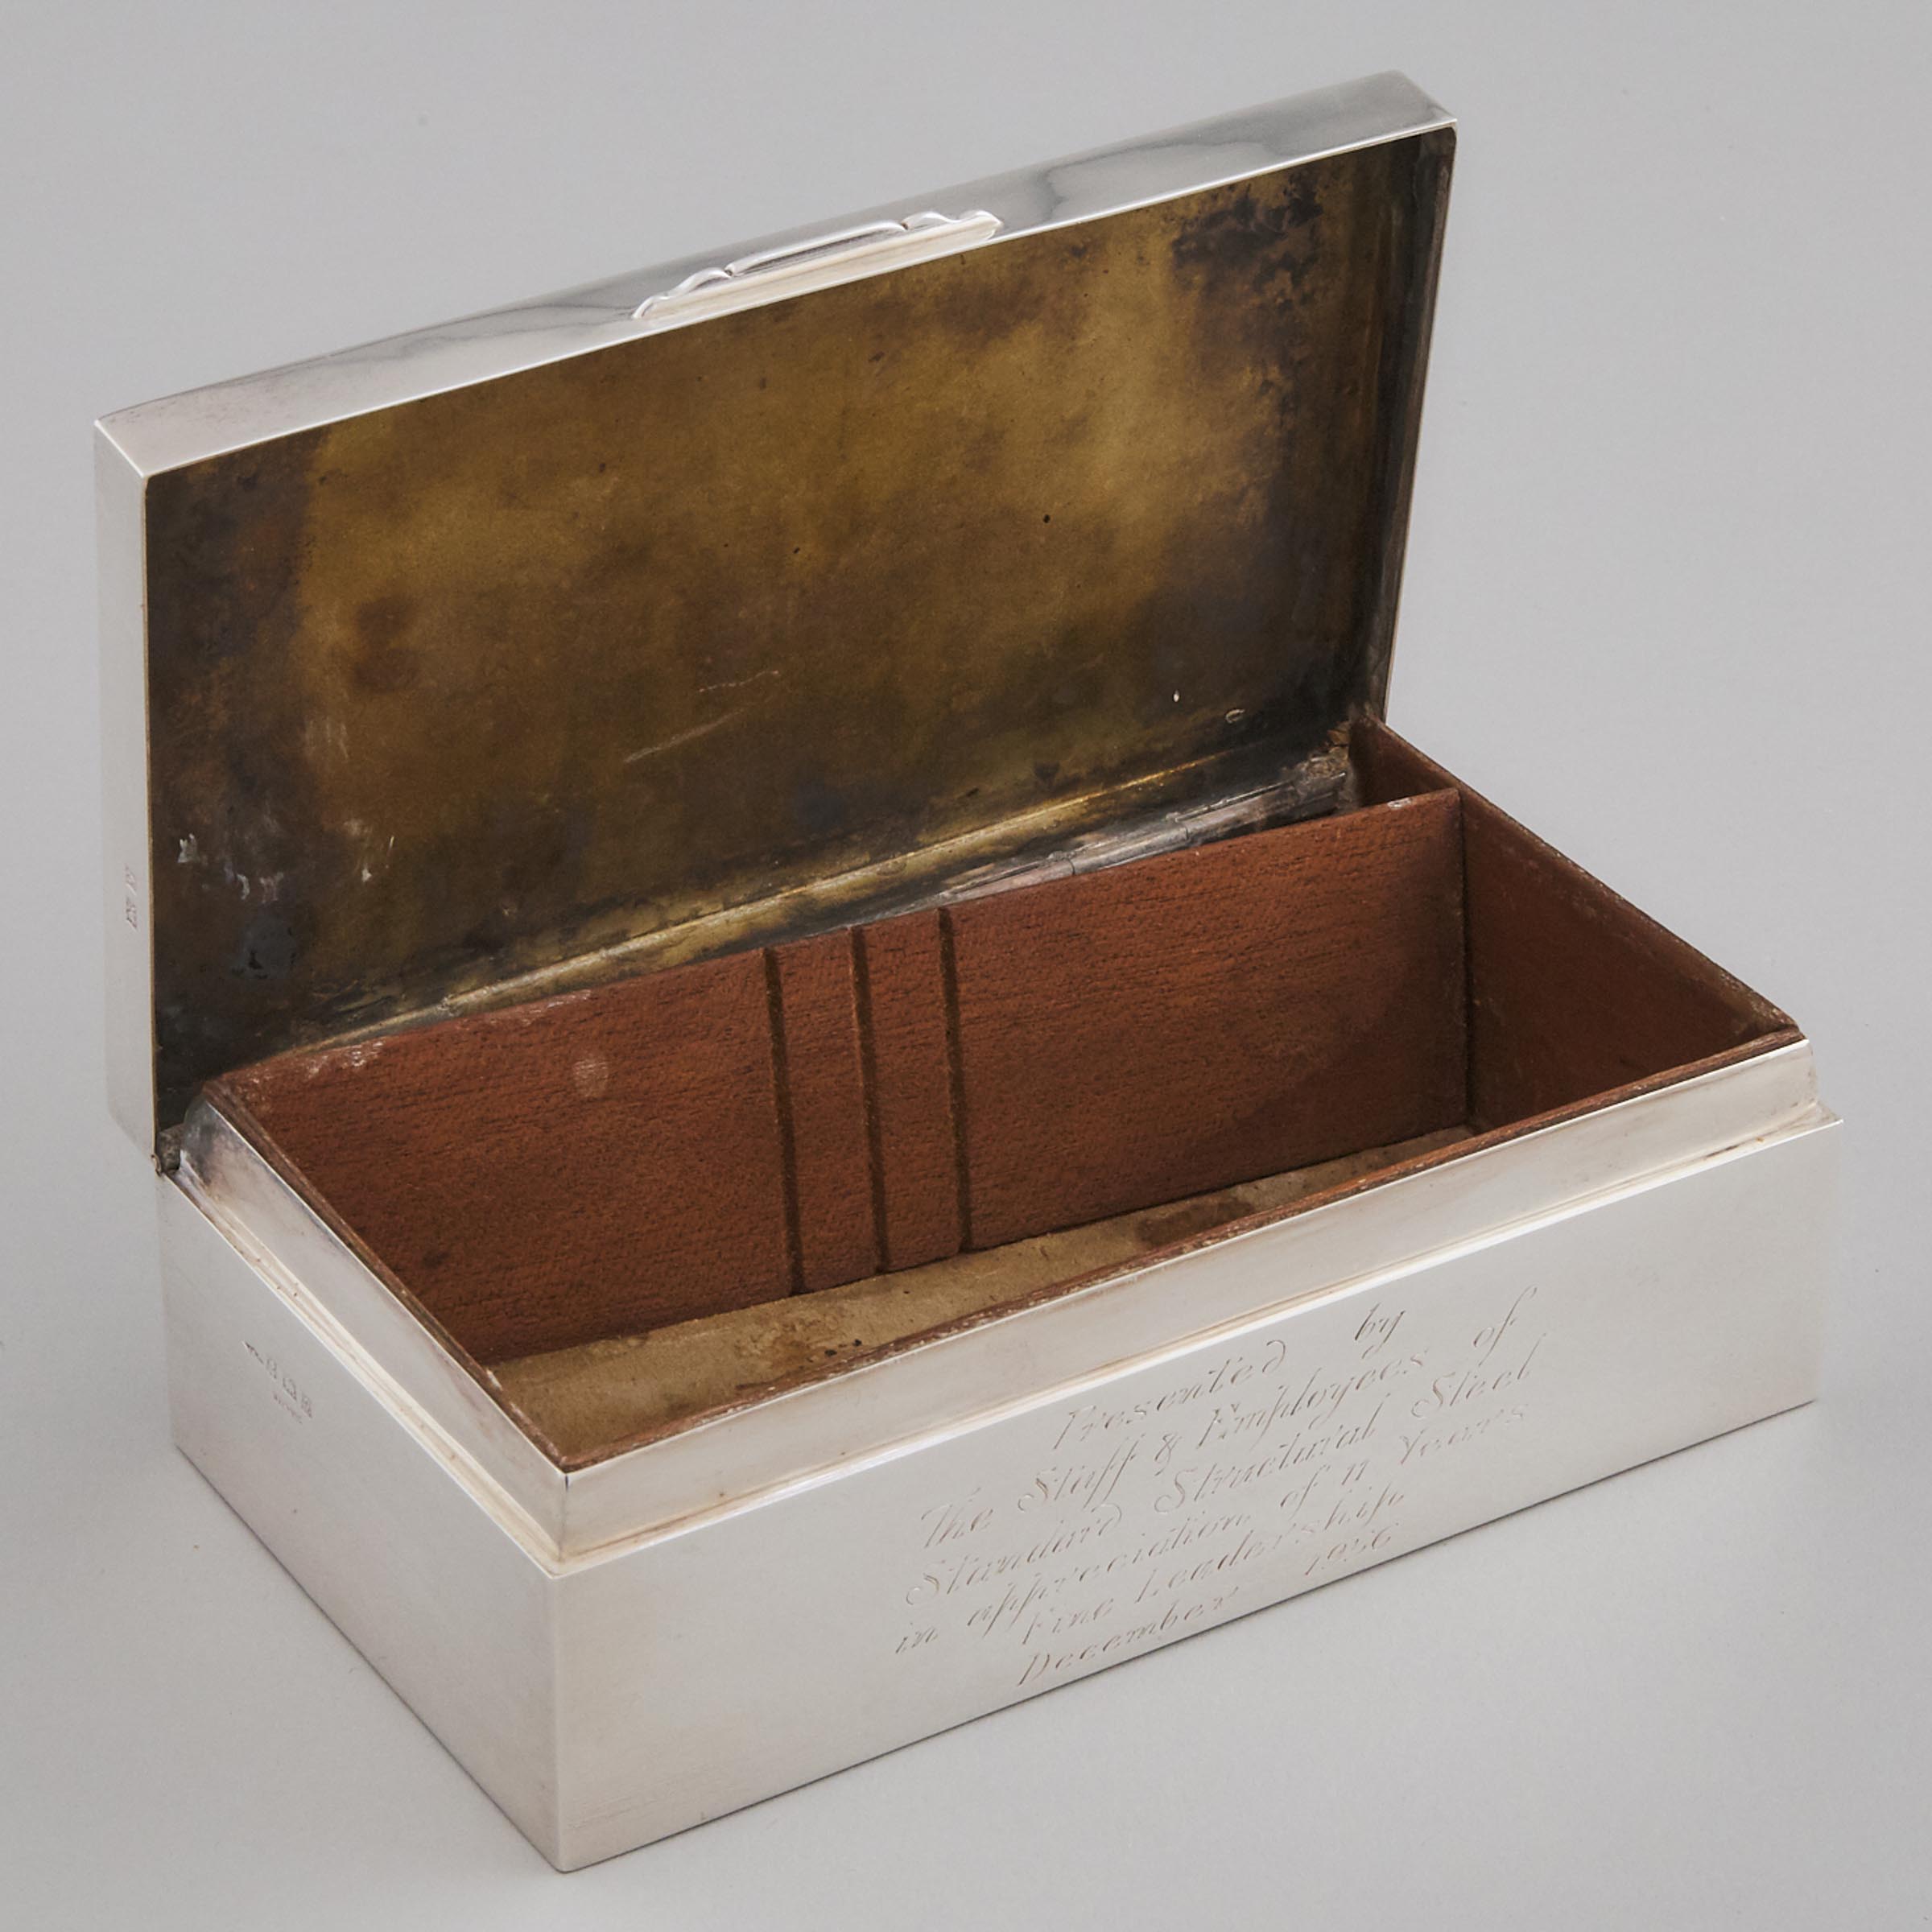 English Silver Rectangular Cigarette Box, J.T. Deeley Ltd., Birmingham, 1956